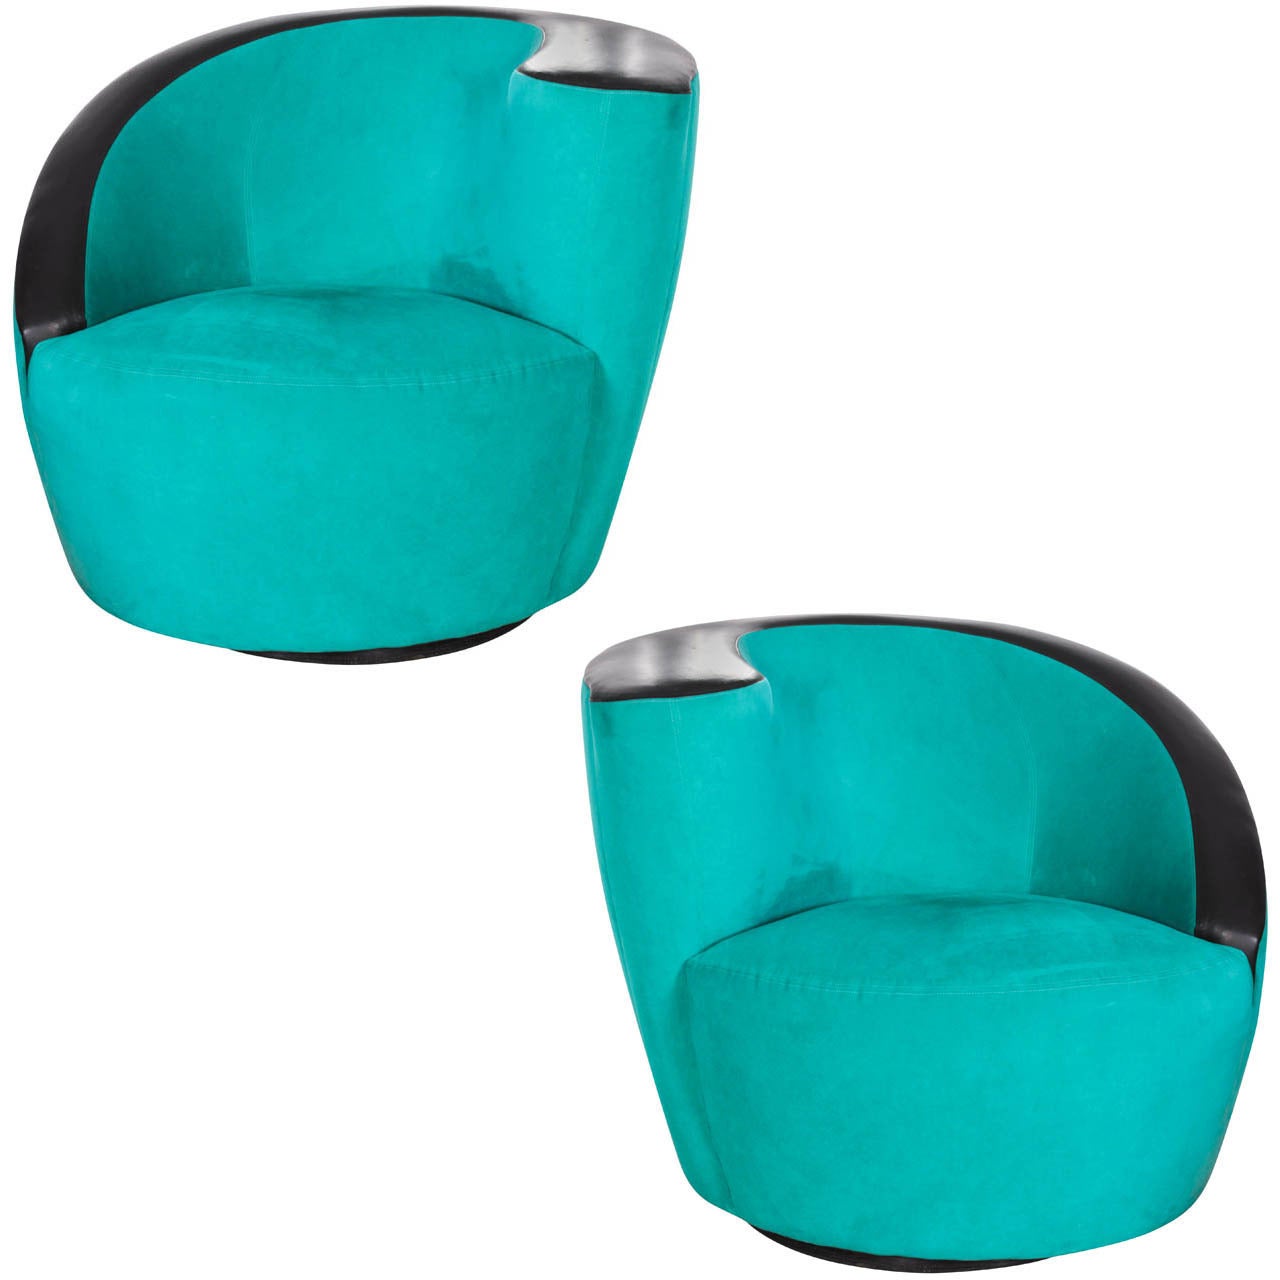 Pair of Swiveling Nautilus Chairs by Vladimir Kagan